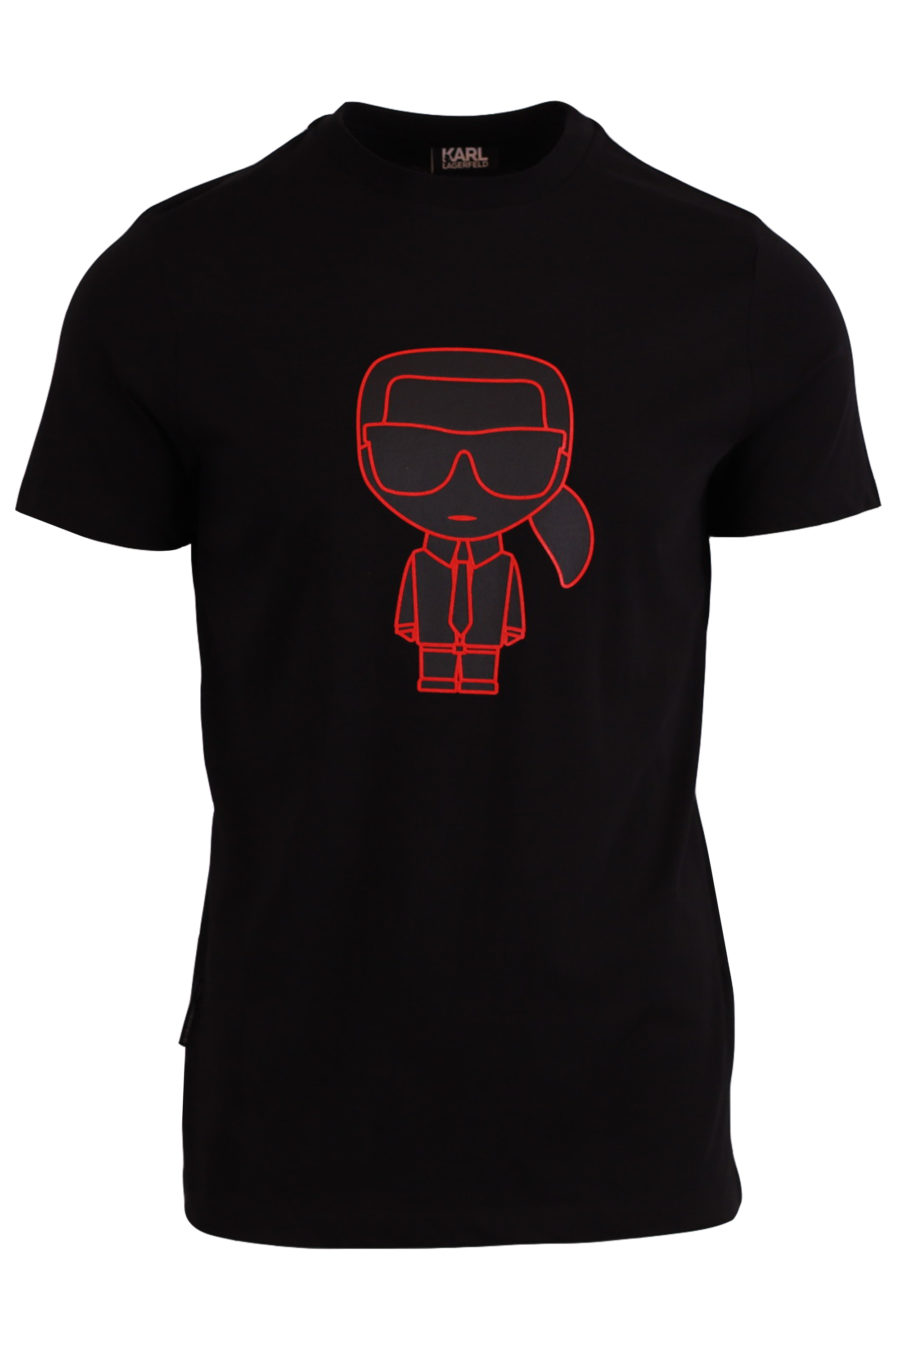 Black T-shirt with red designer silhouette - 0a1cb4c9e2ed091a150ed3fc3f349b634a541a01